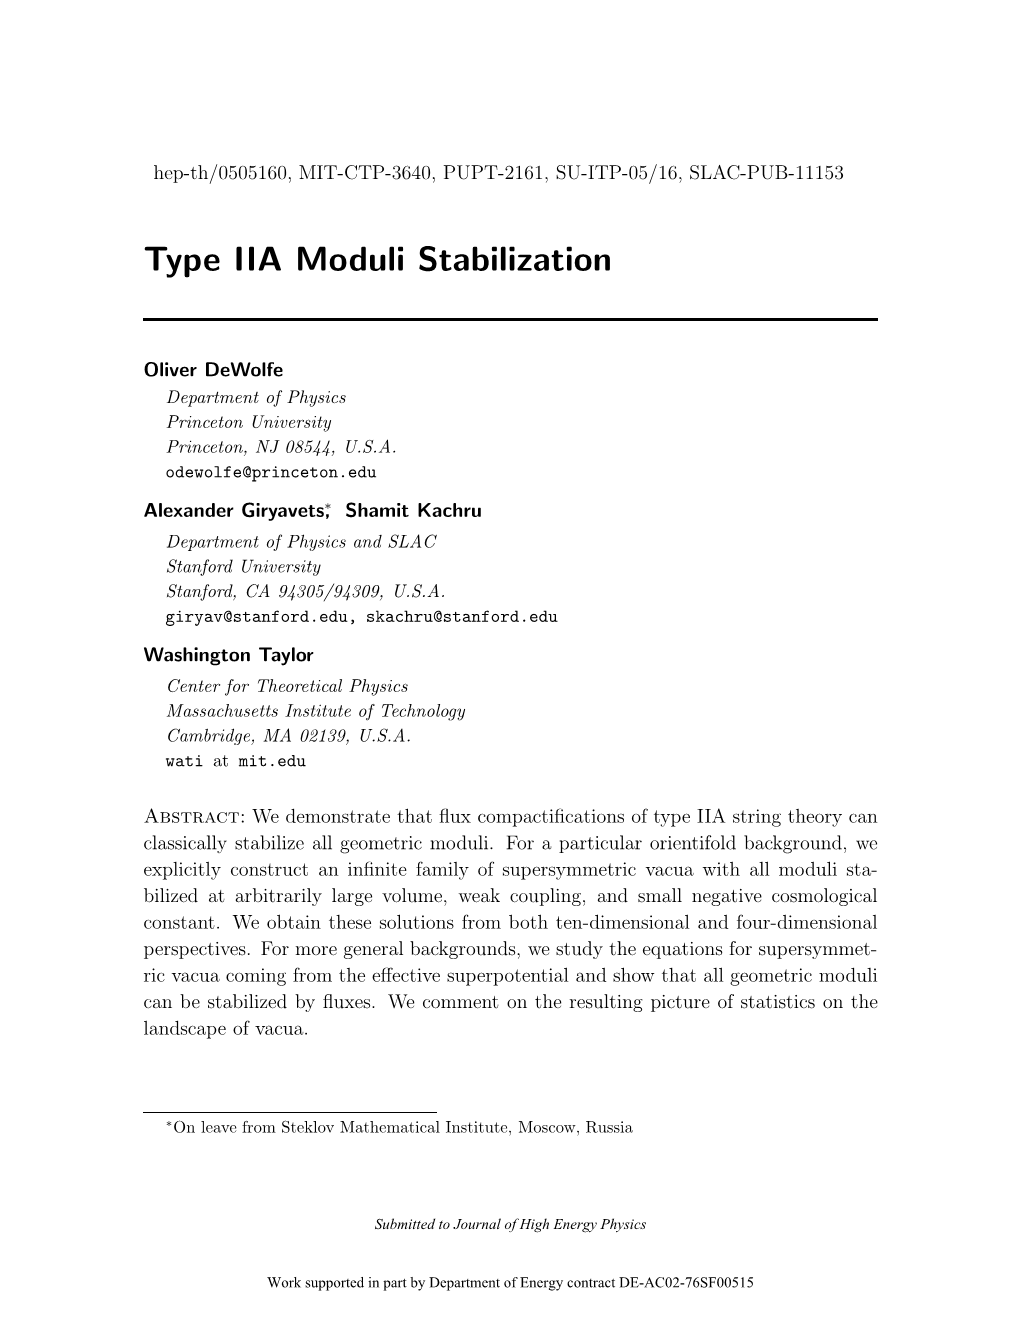 Type IIA Moduli Stabilization